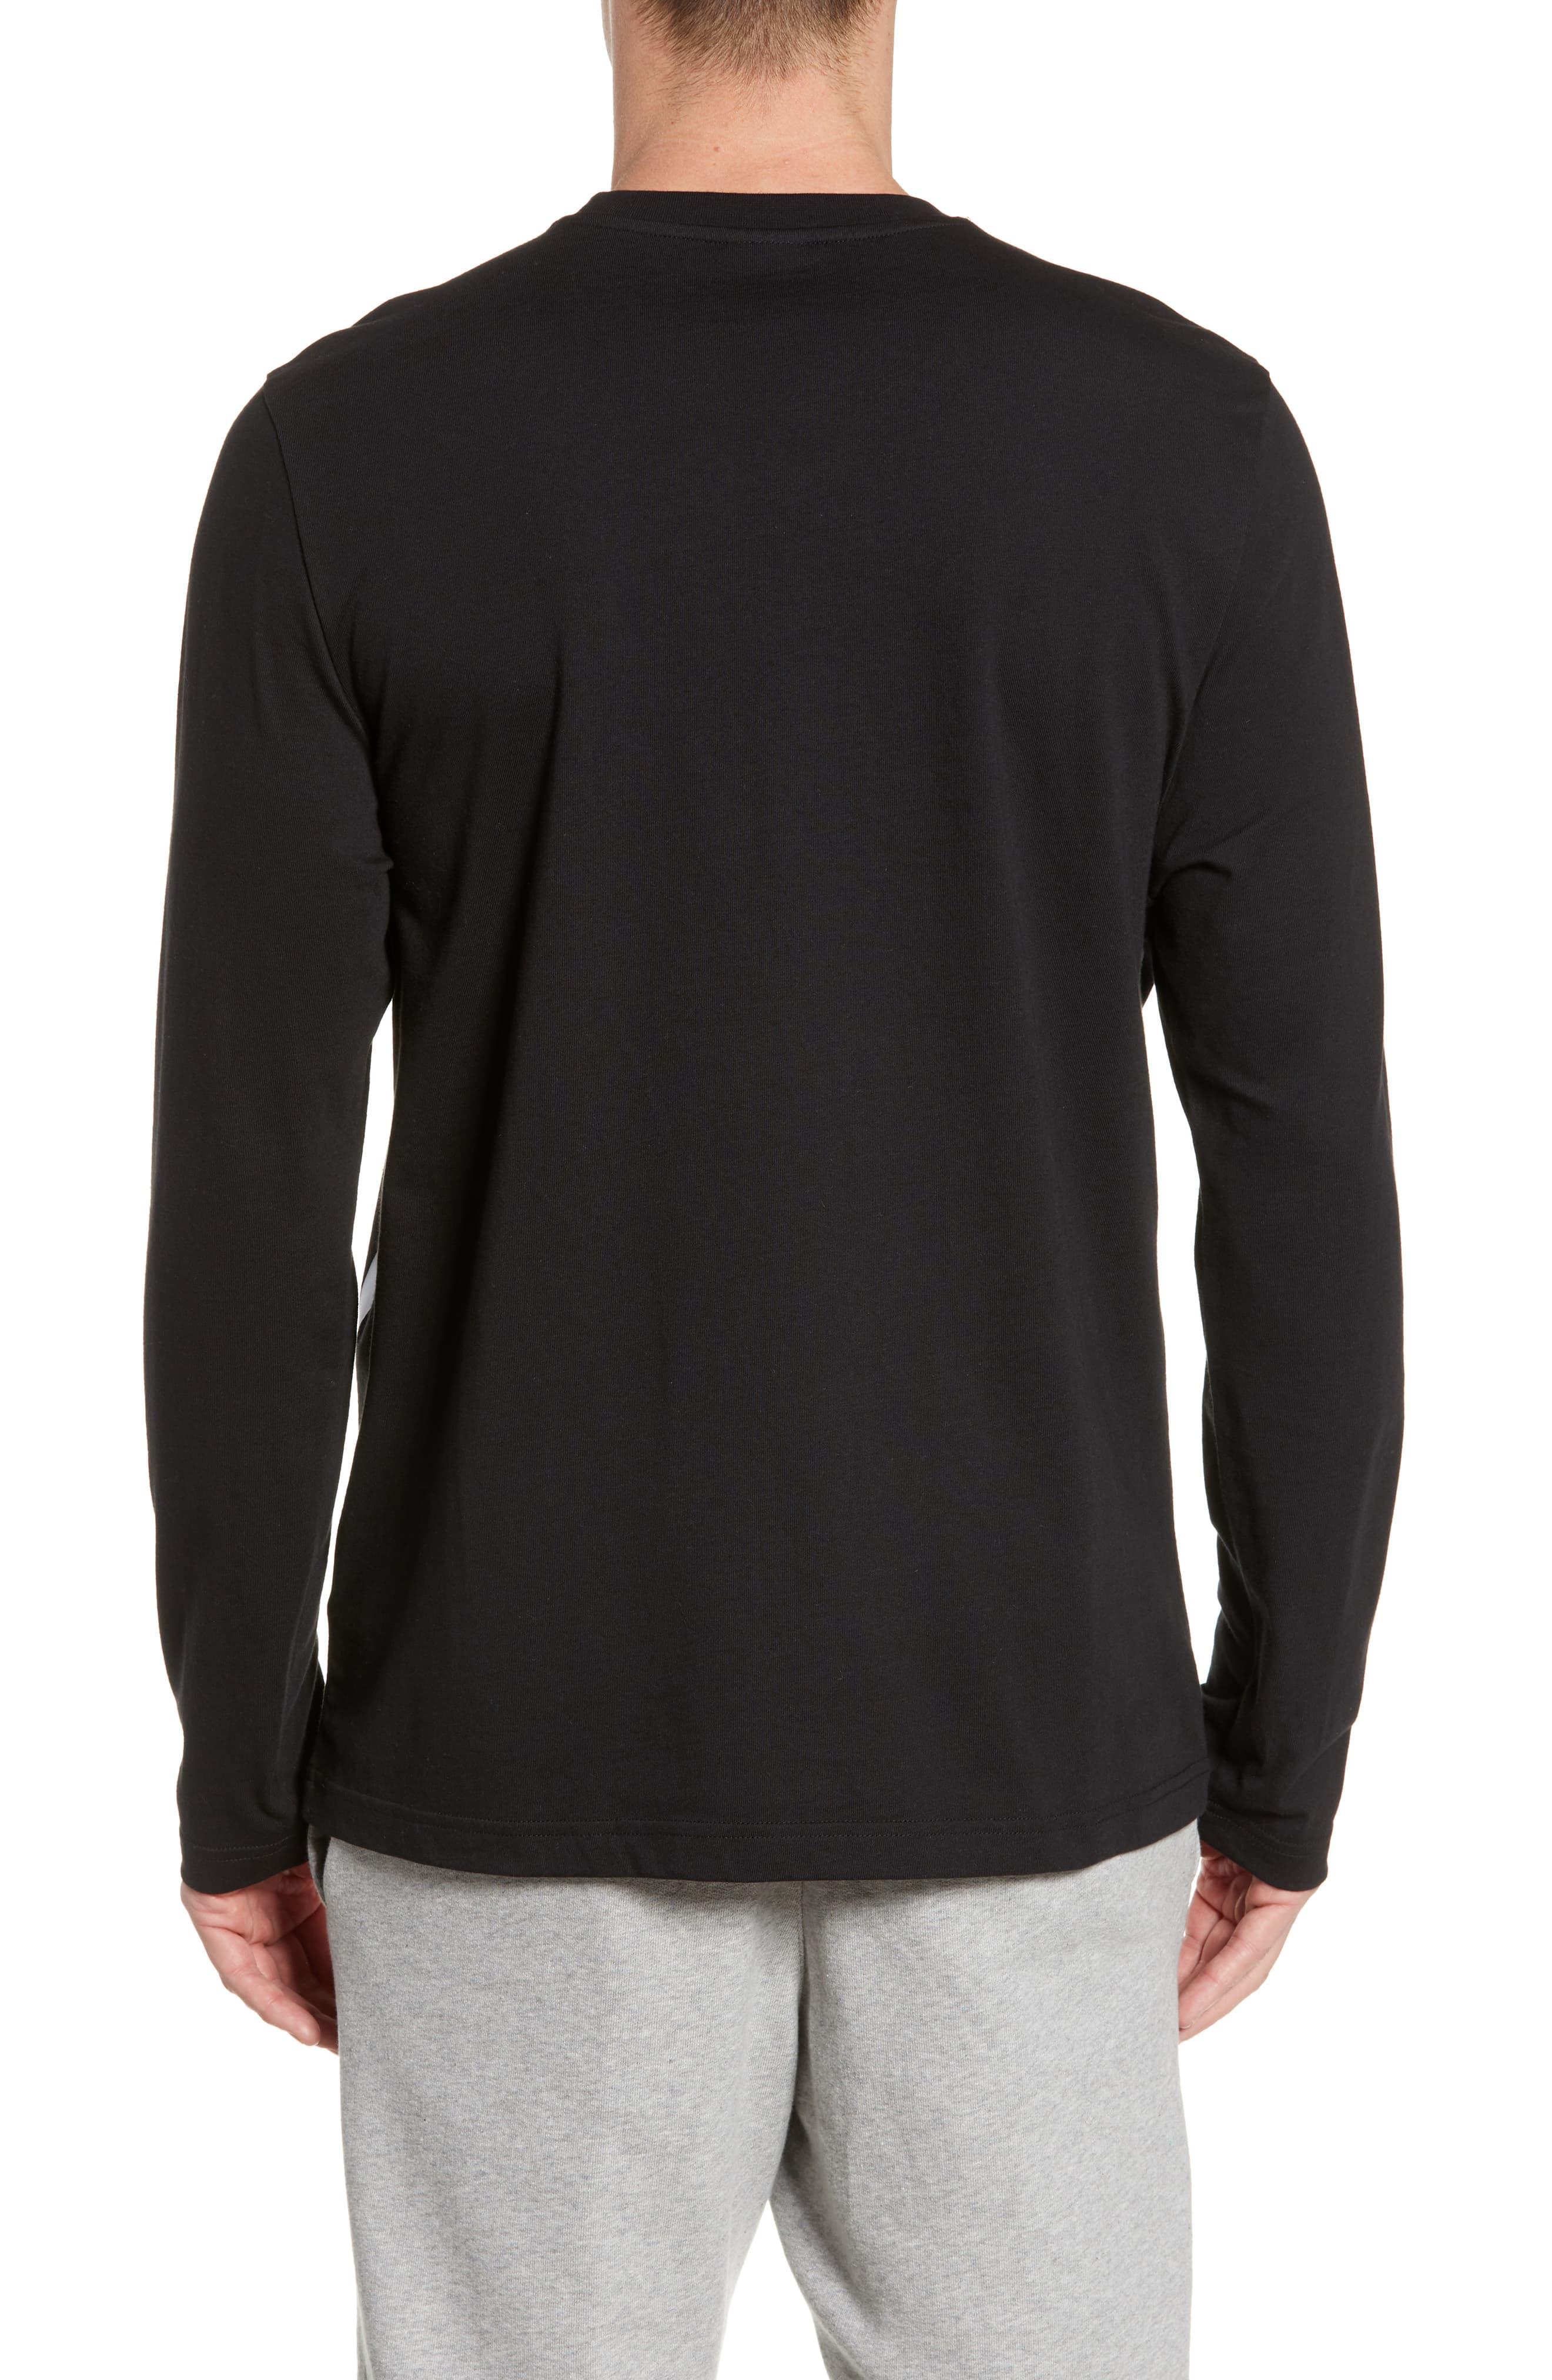 Reebok Classic Vector Logo Long Sleeve T-shirt in Black for Men - Save ...